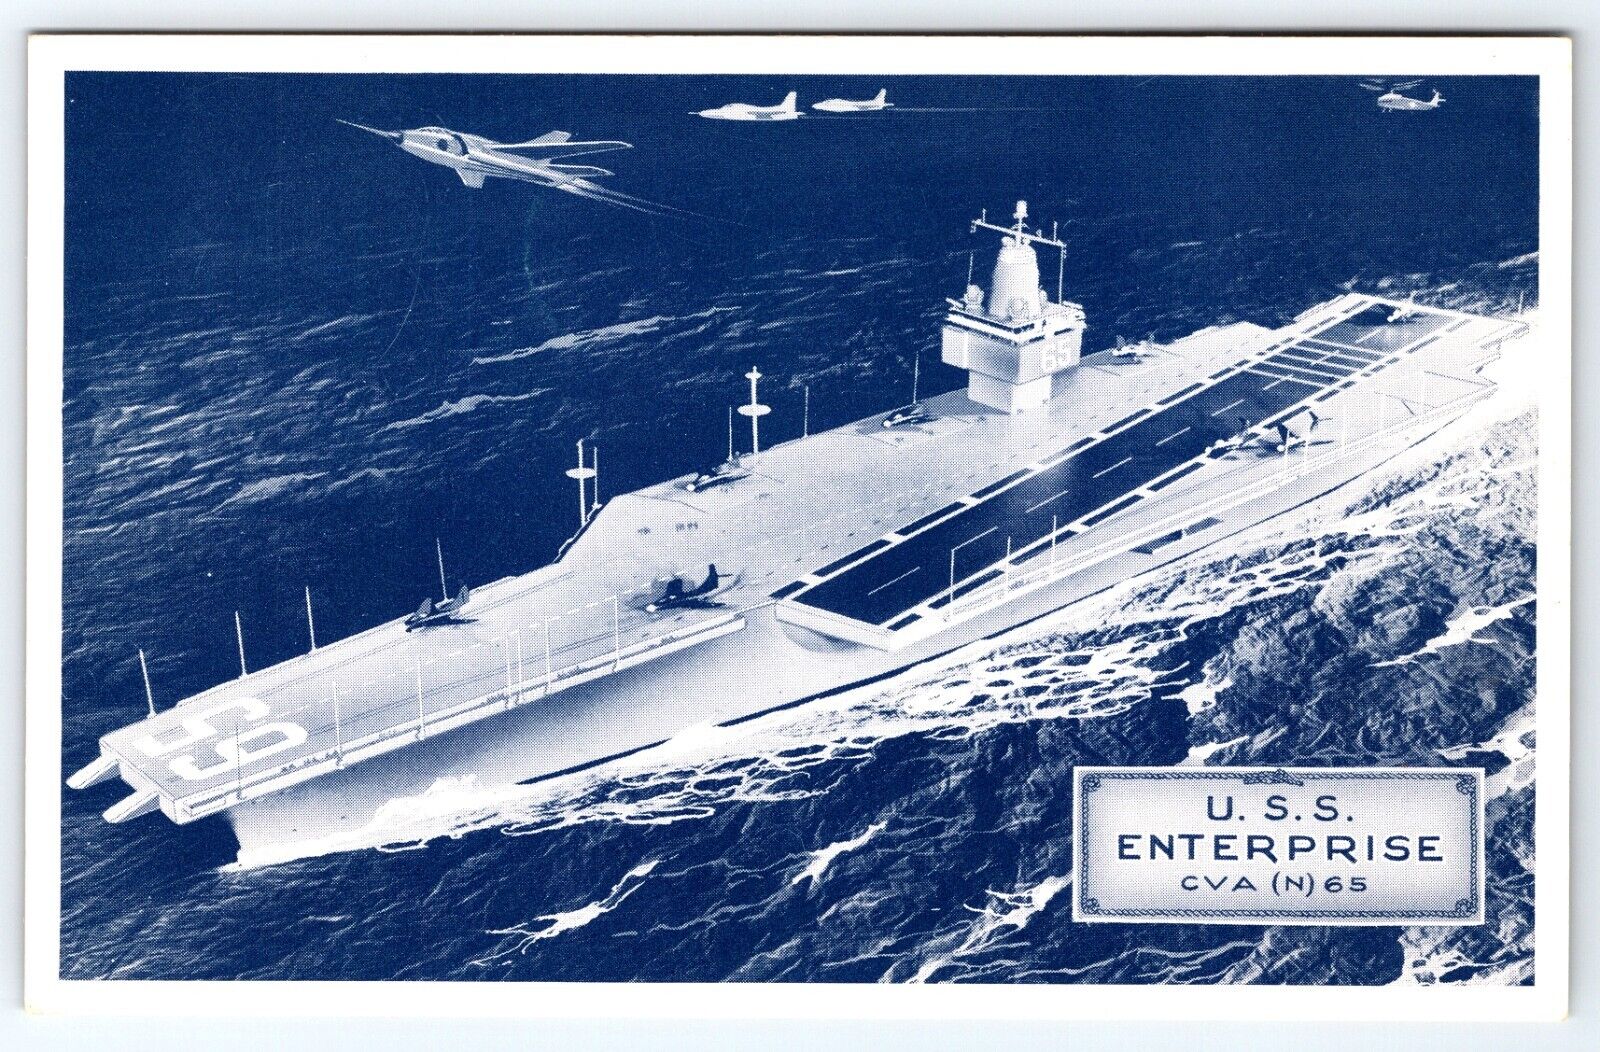 U.S.S. Enterprise CVA (N) 65 Aircraft Carrier  Artist Conception Postcard